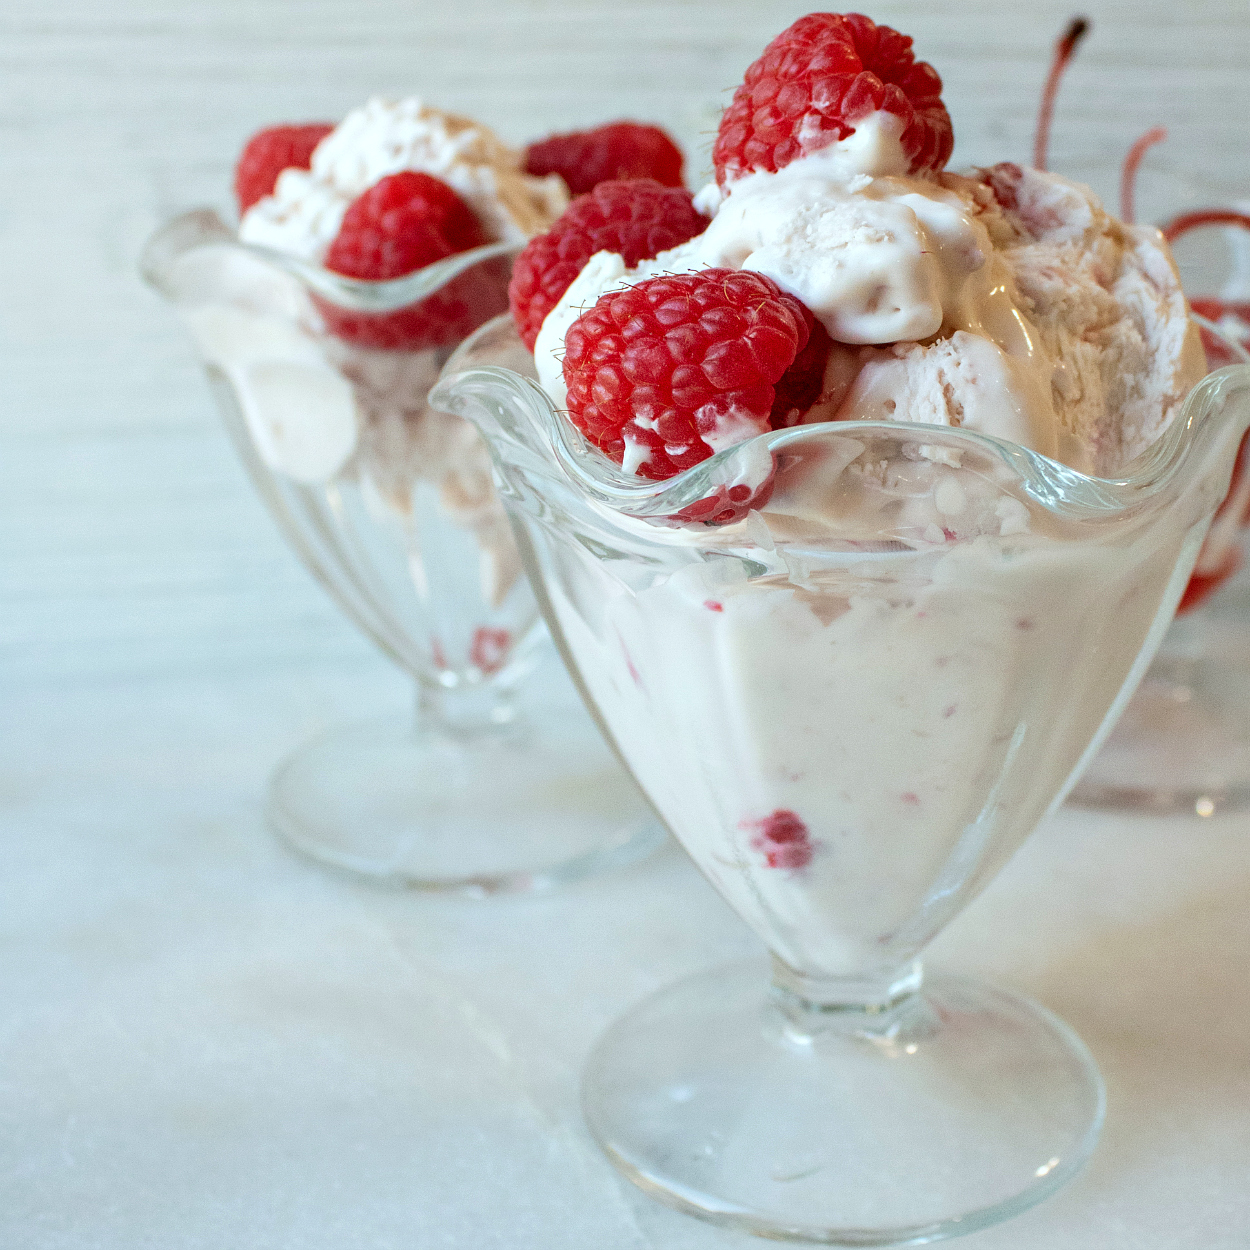 raspberry ice cream with fresh berries